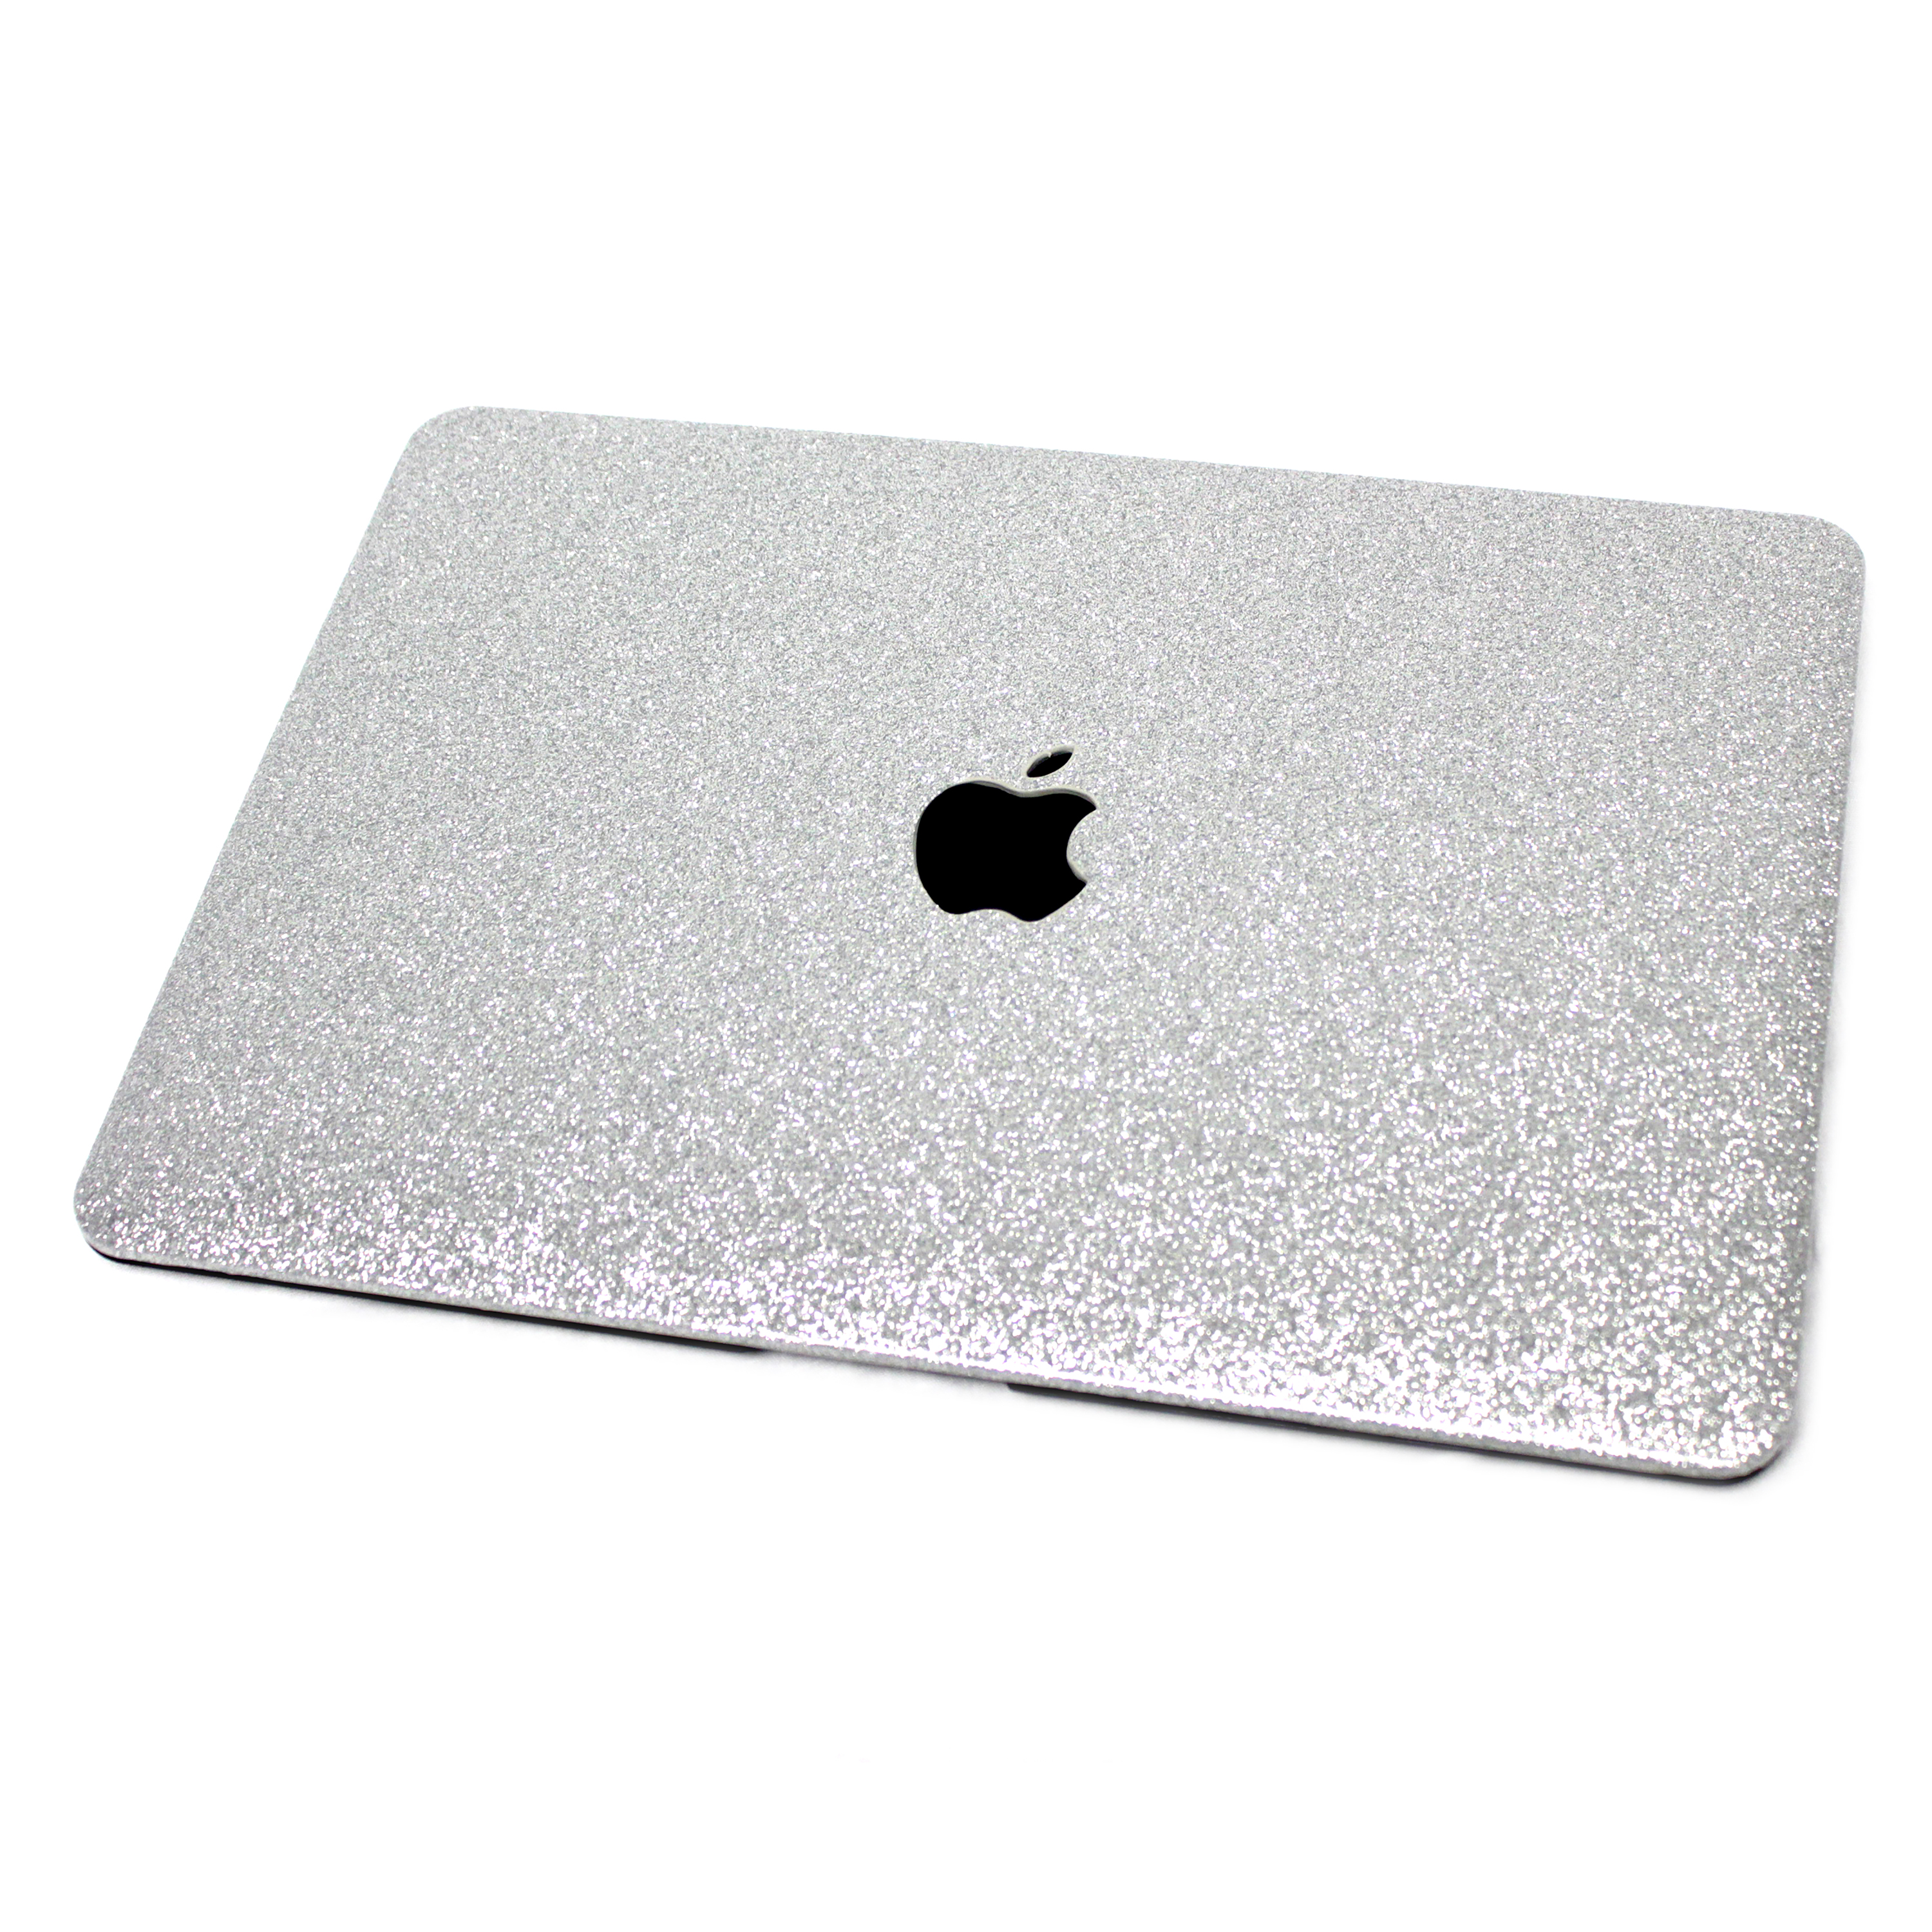 Mountain Macbook Pro 16 Inch Case 2013 Macbook Air 13 Inch Case East Macbook Pro 13 Inch Case A1708 2019 Nature Macbook Pro 15 Case JD0503